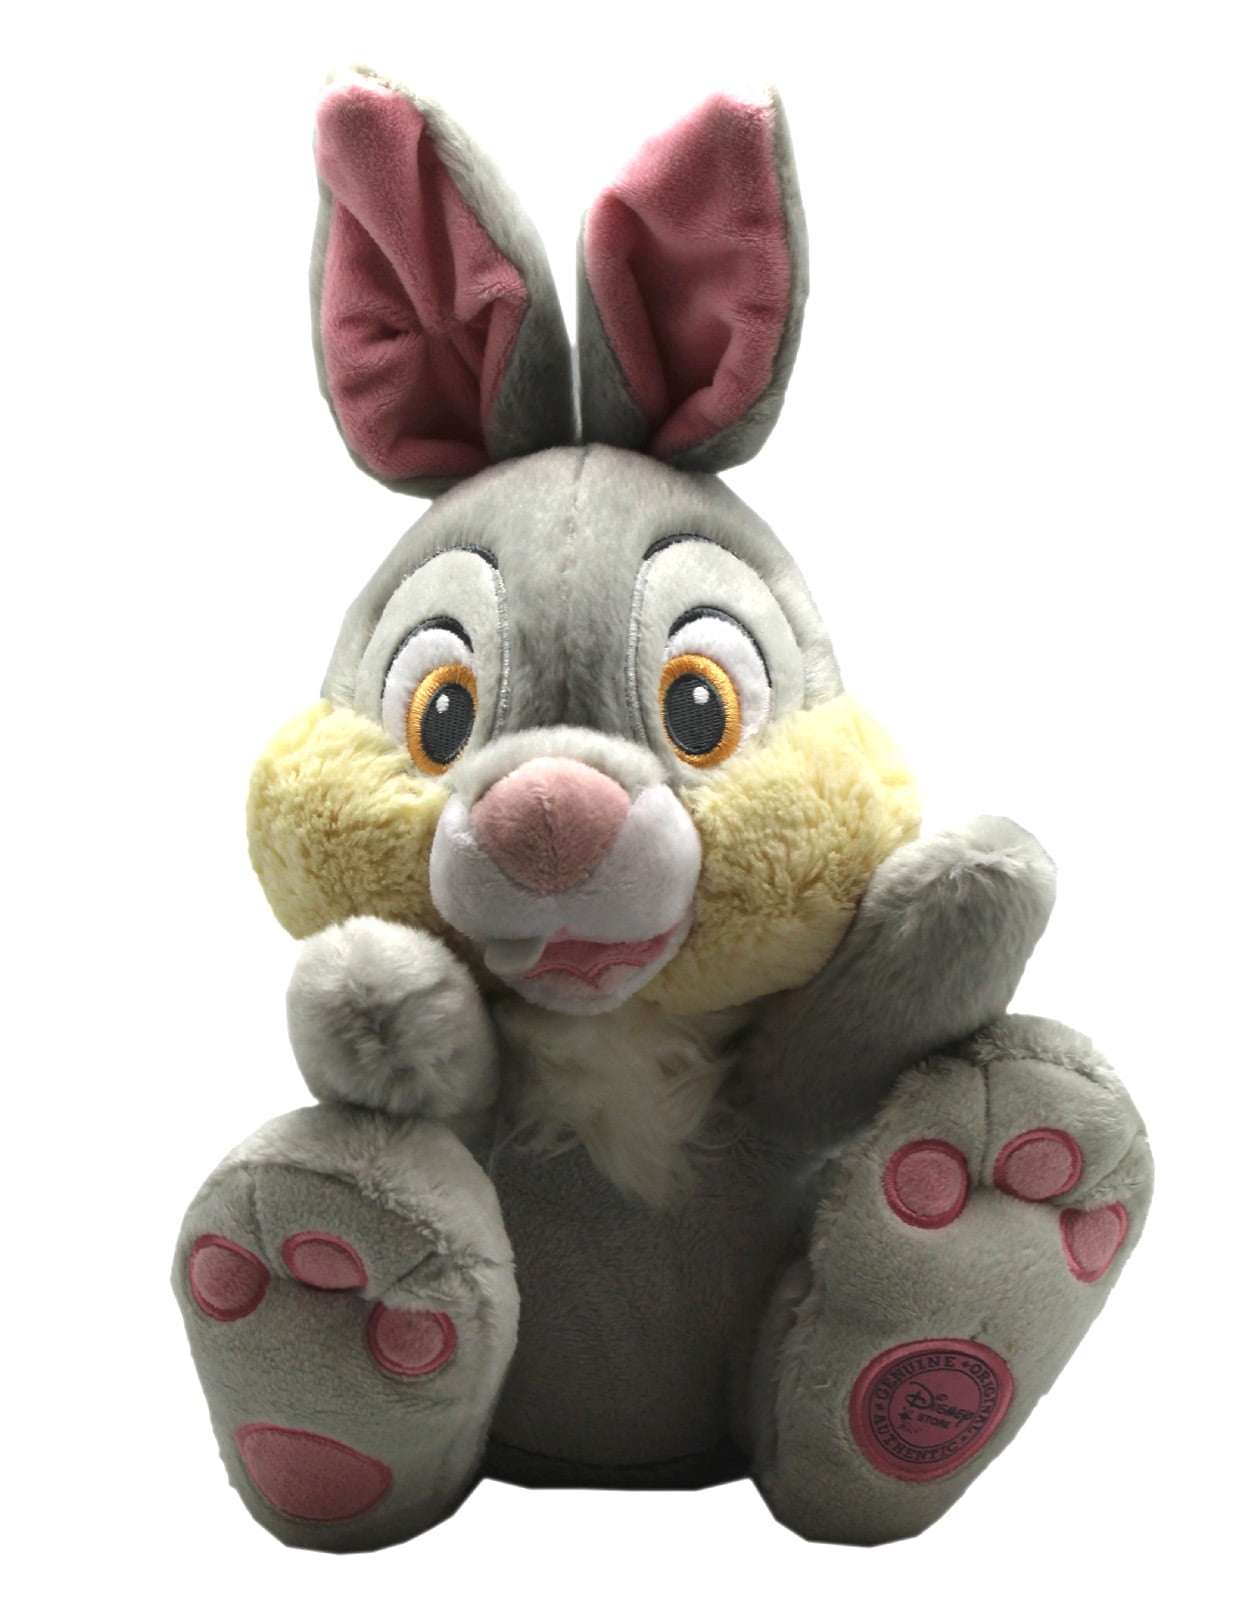 Thumper Bean Bag Plush Bambi 7in Disney Stuffed Animal Bunny Rabbit Gray for sale online